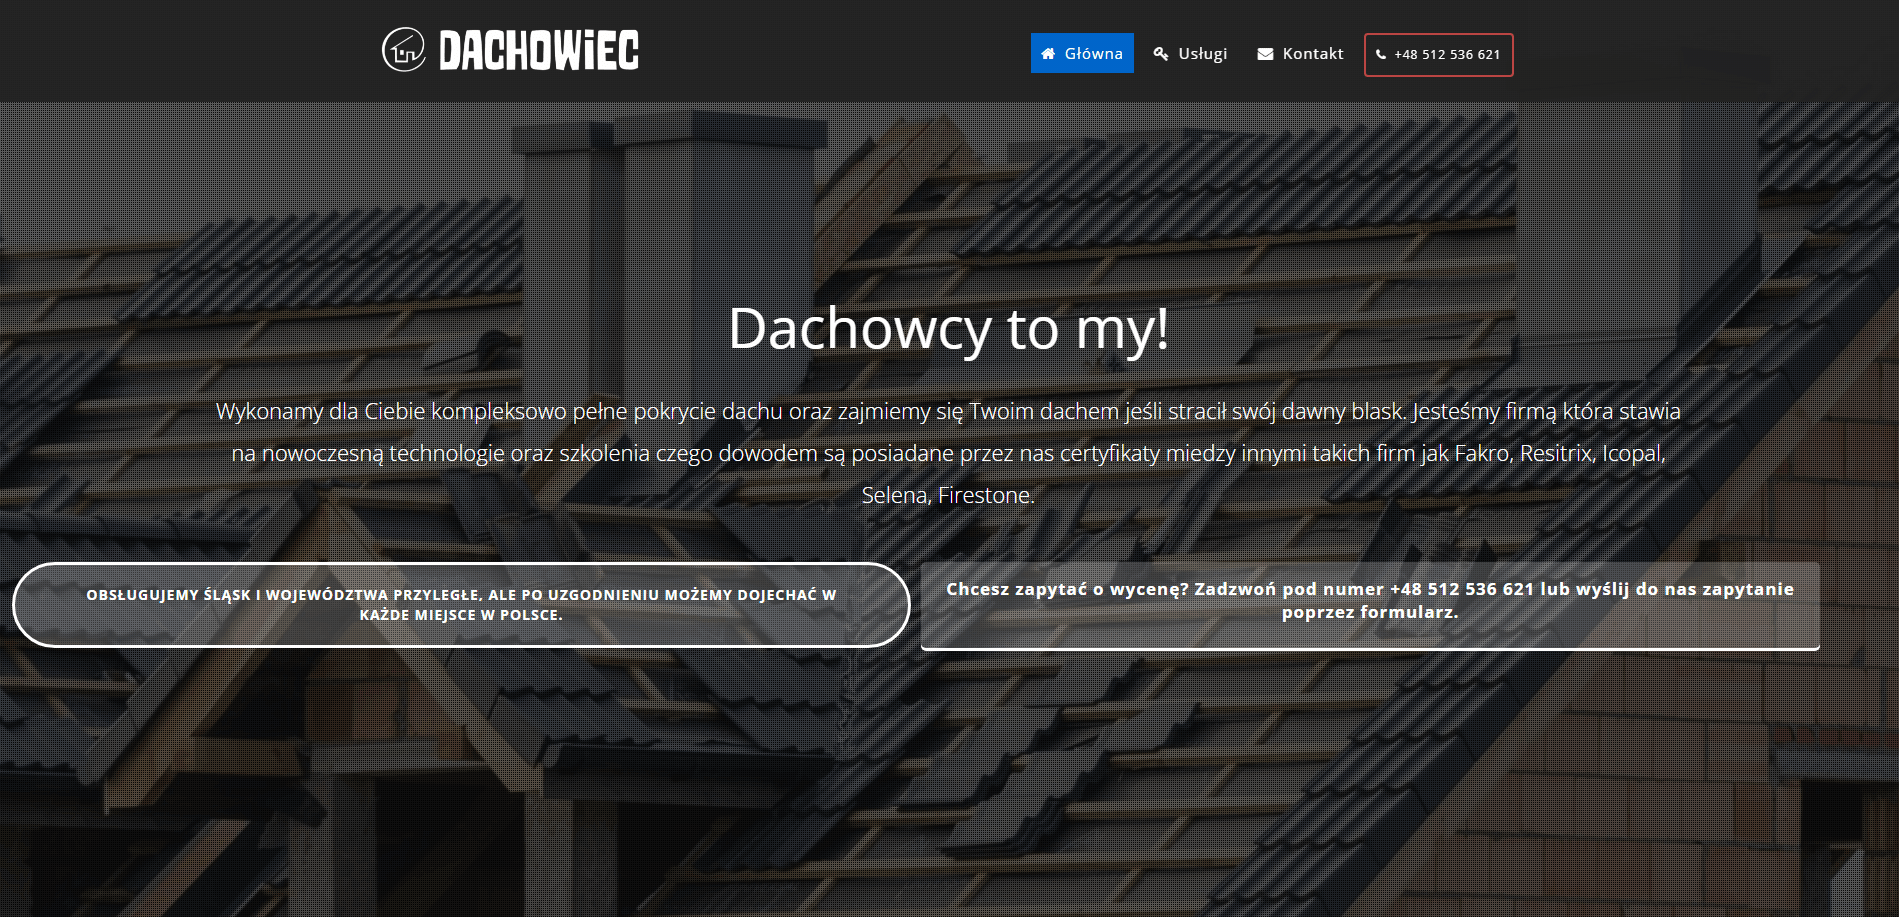 dachowiec.com.pl